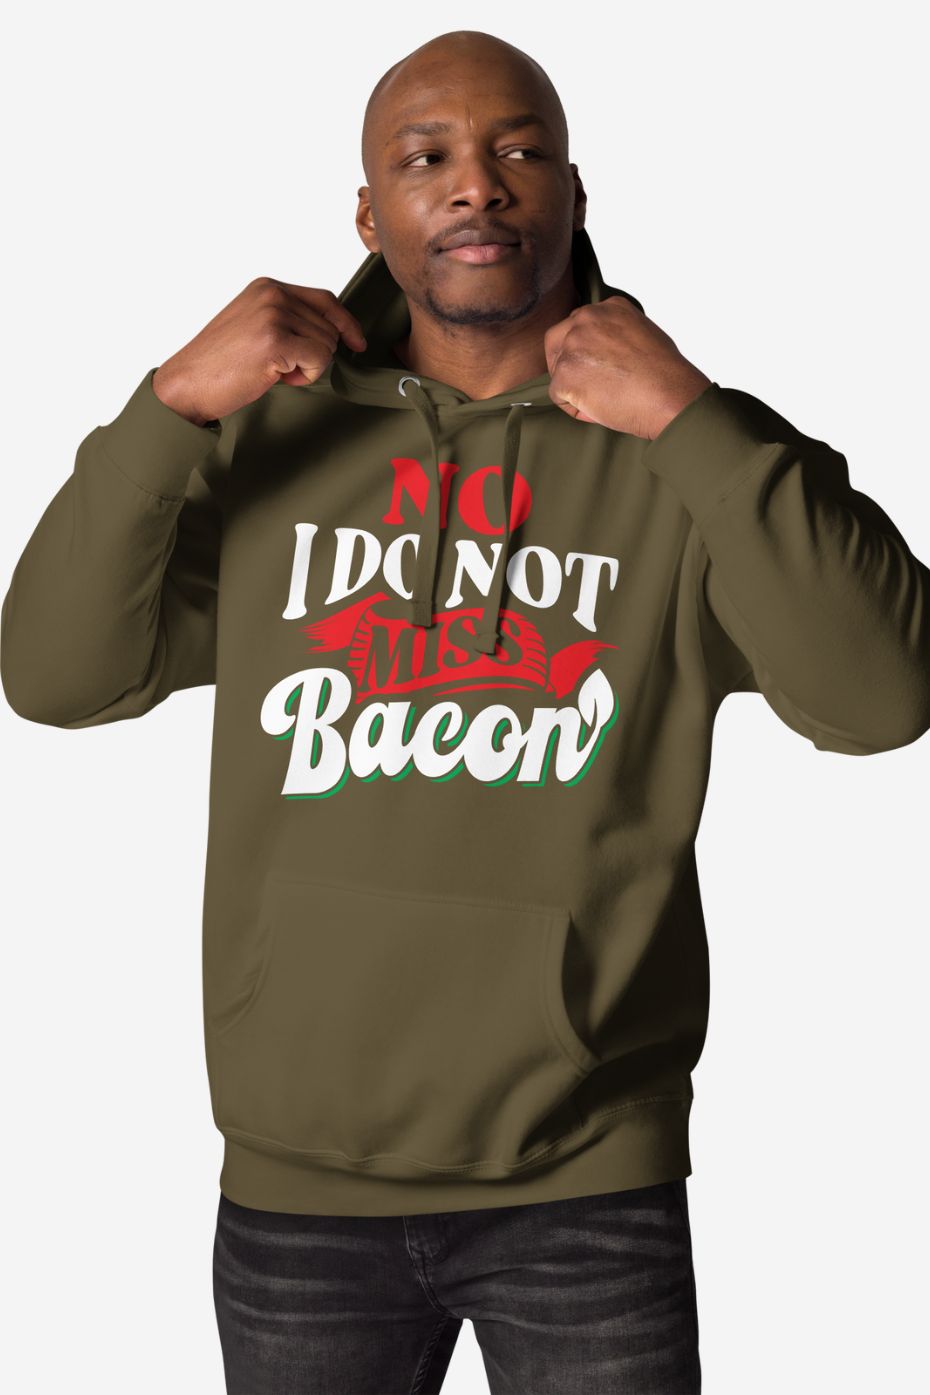 No, I Don't Miss Bacon - Unisex Premium Hoodie